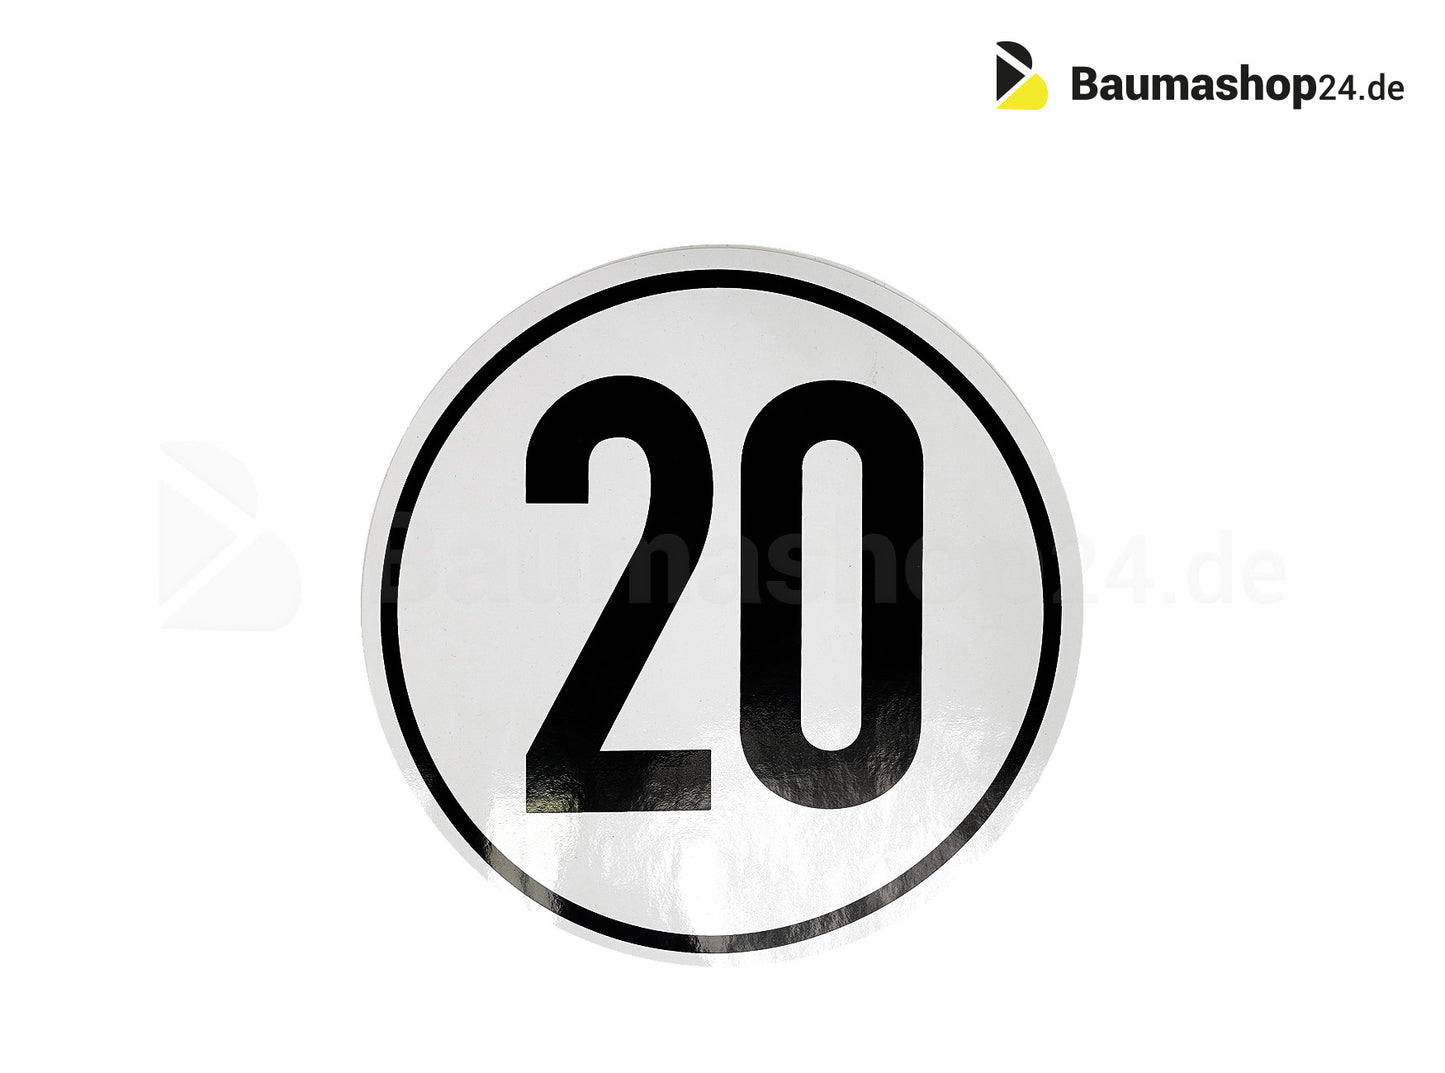 20 km/h sticker round StVZO compliant